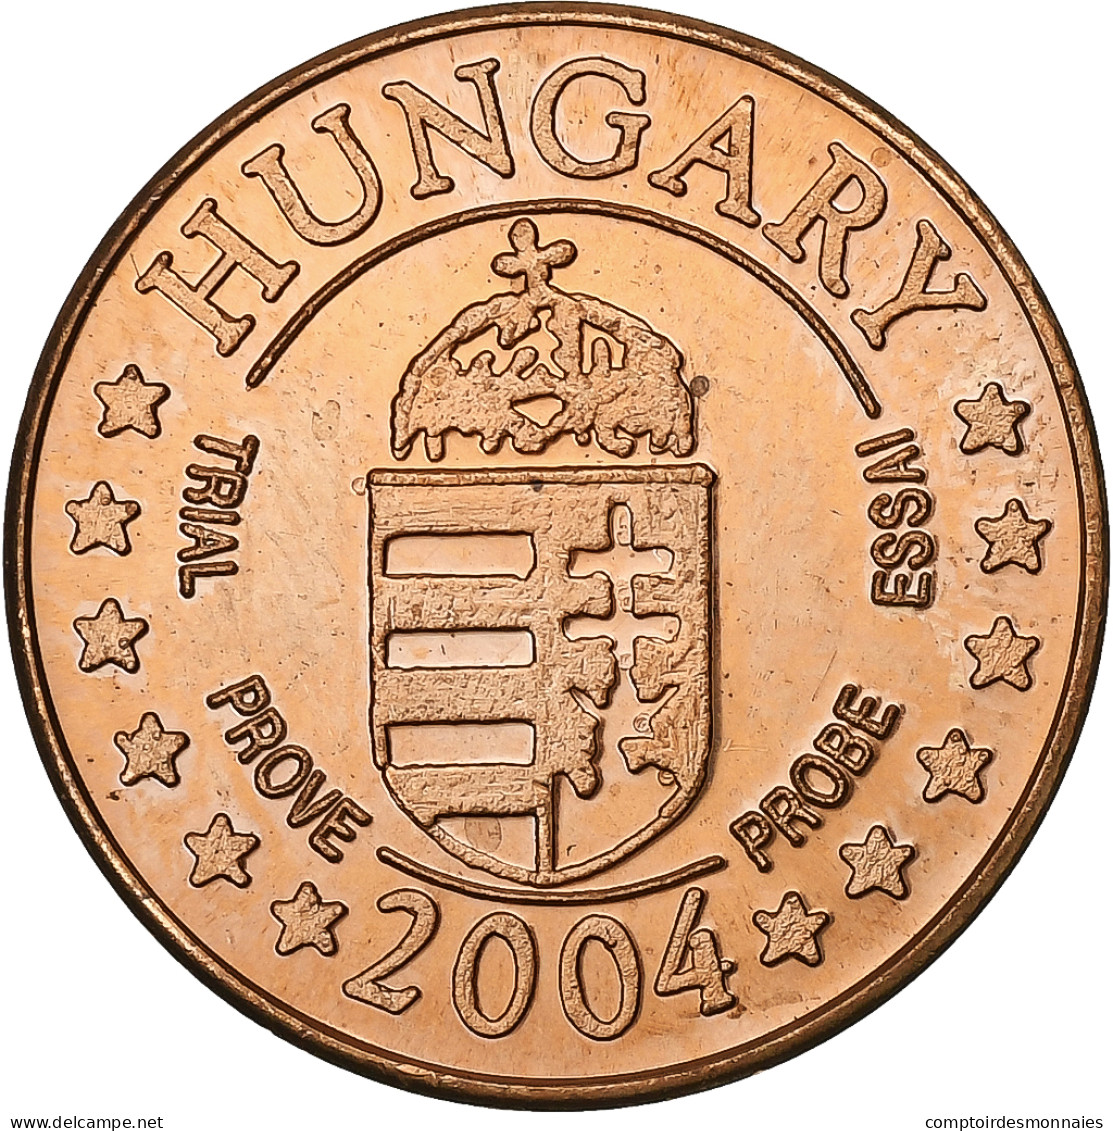 Hongrie, 2 Euro Cent, 2004, Cuivre, SPL+ - Prove Private